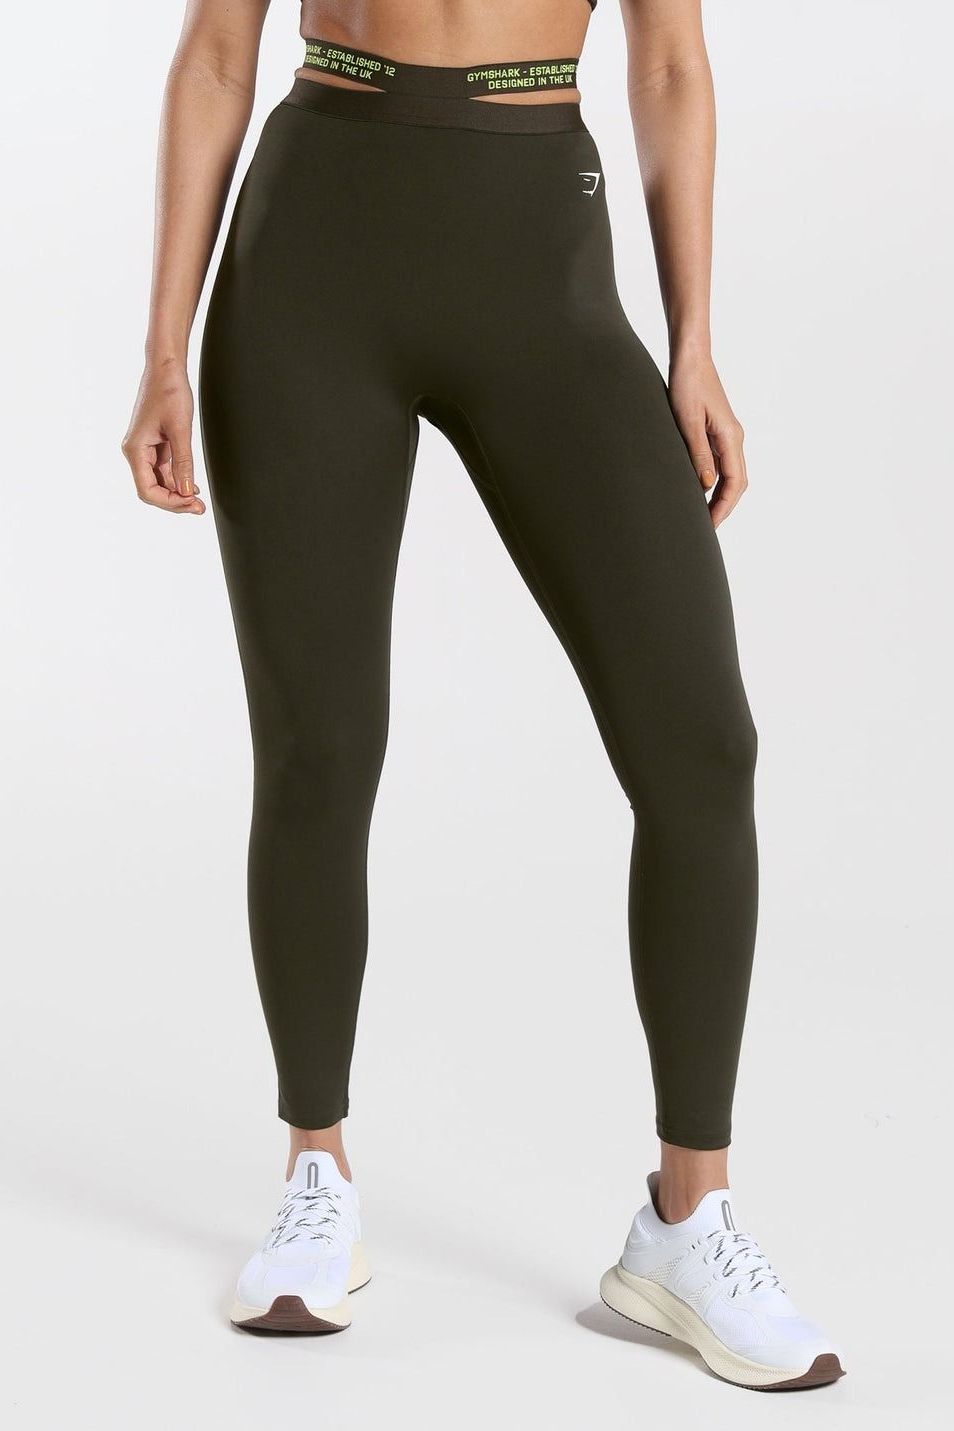 Gymshark, Pants & Jumpsuits, Gymshark Fit Seamless Leggings Gray Neon  Green Waistband Size Medium